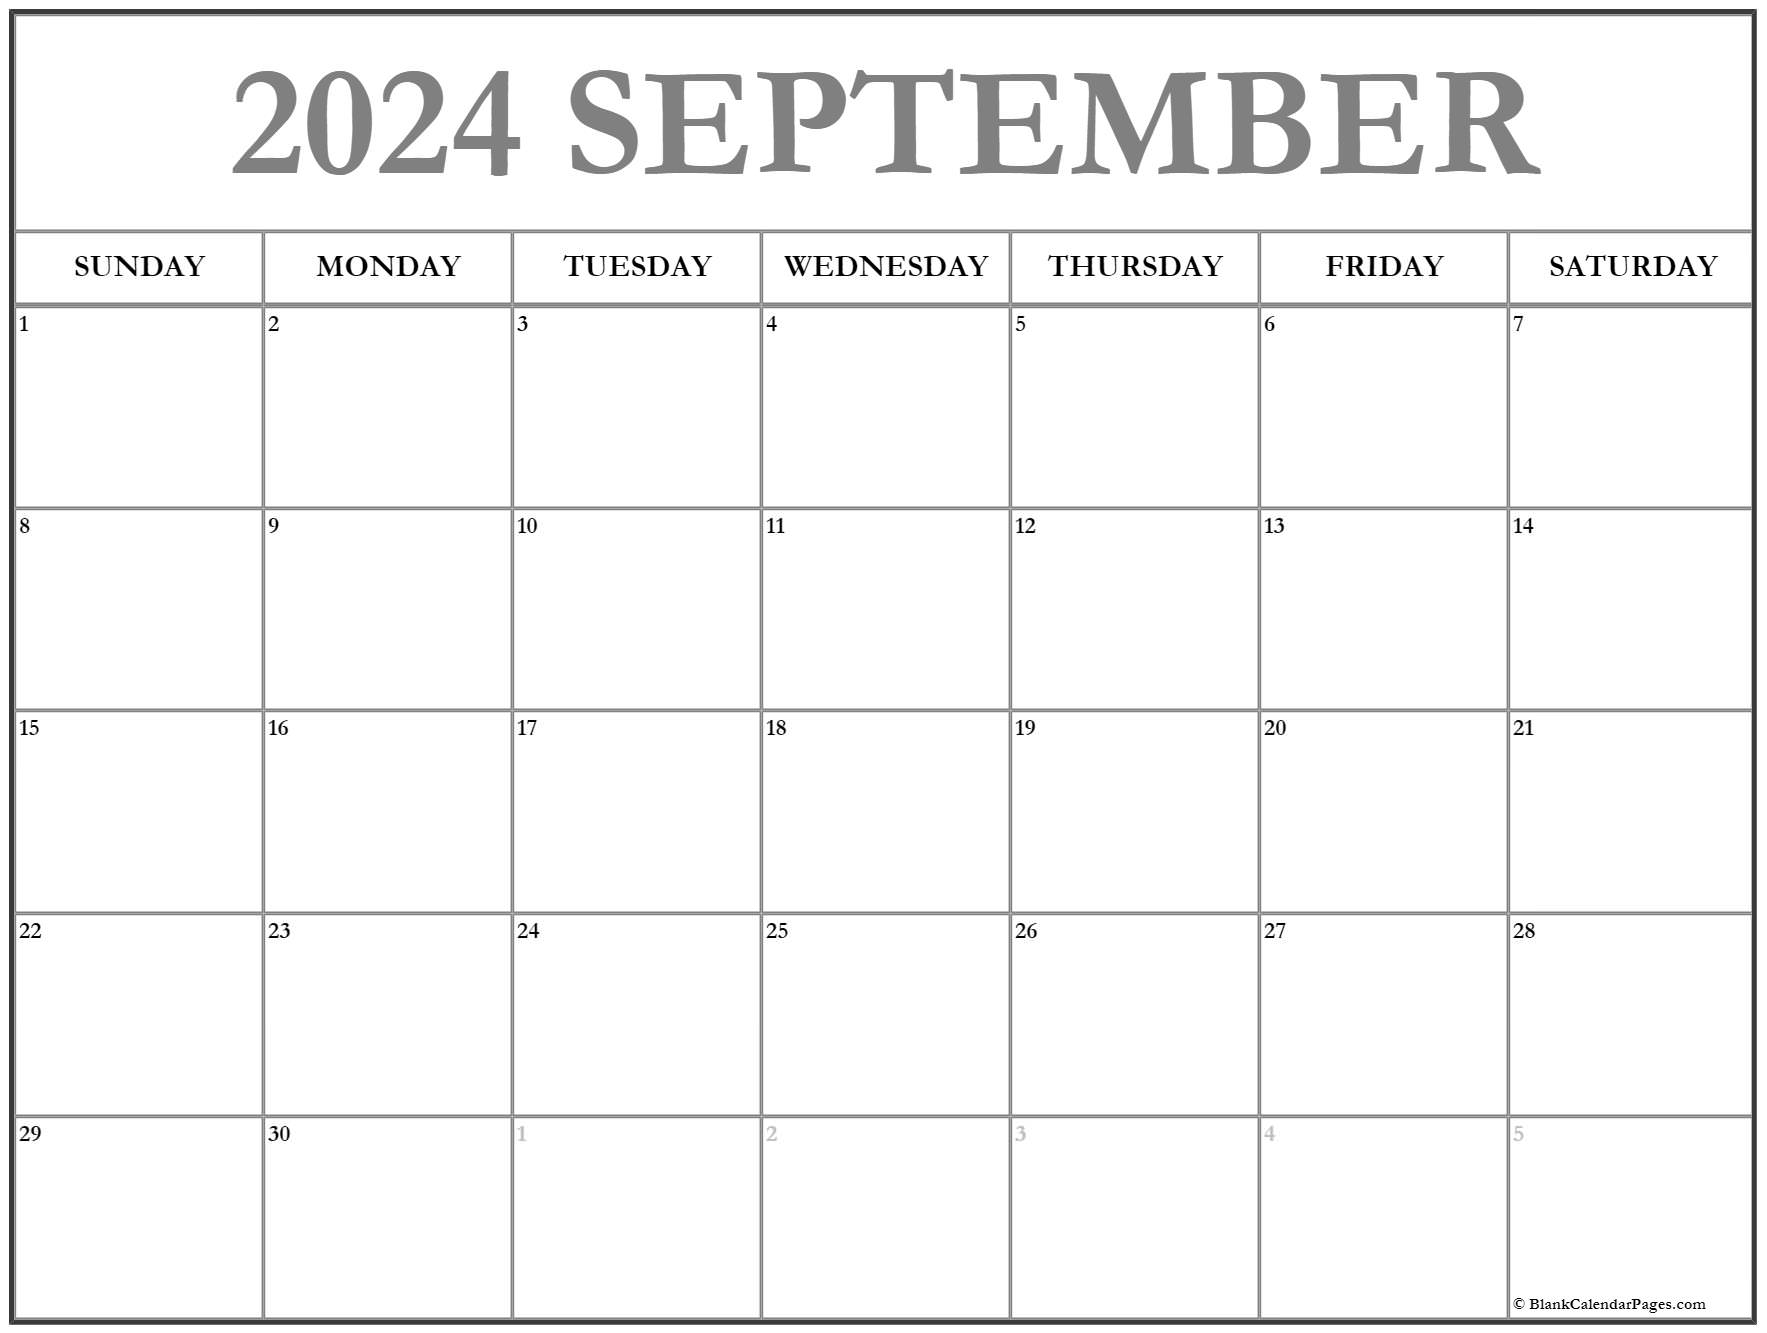 September 2022 calendar free printable calendar